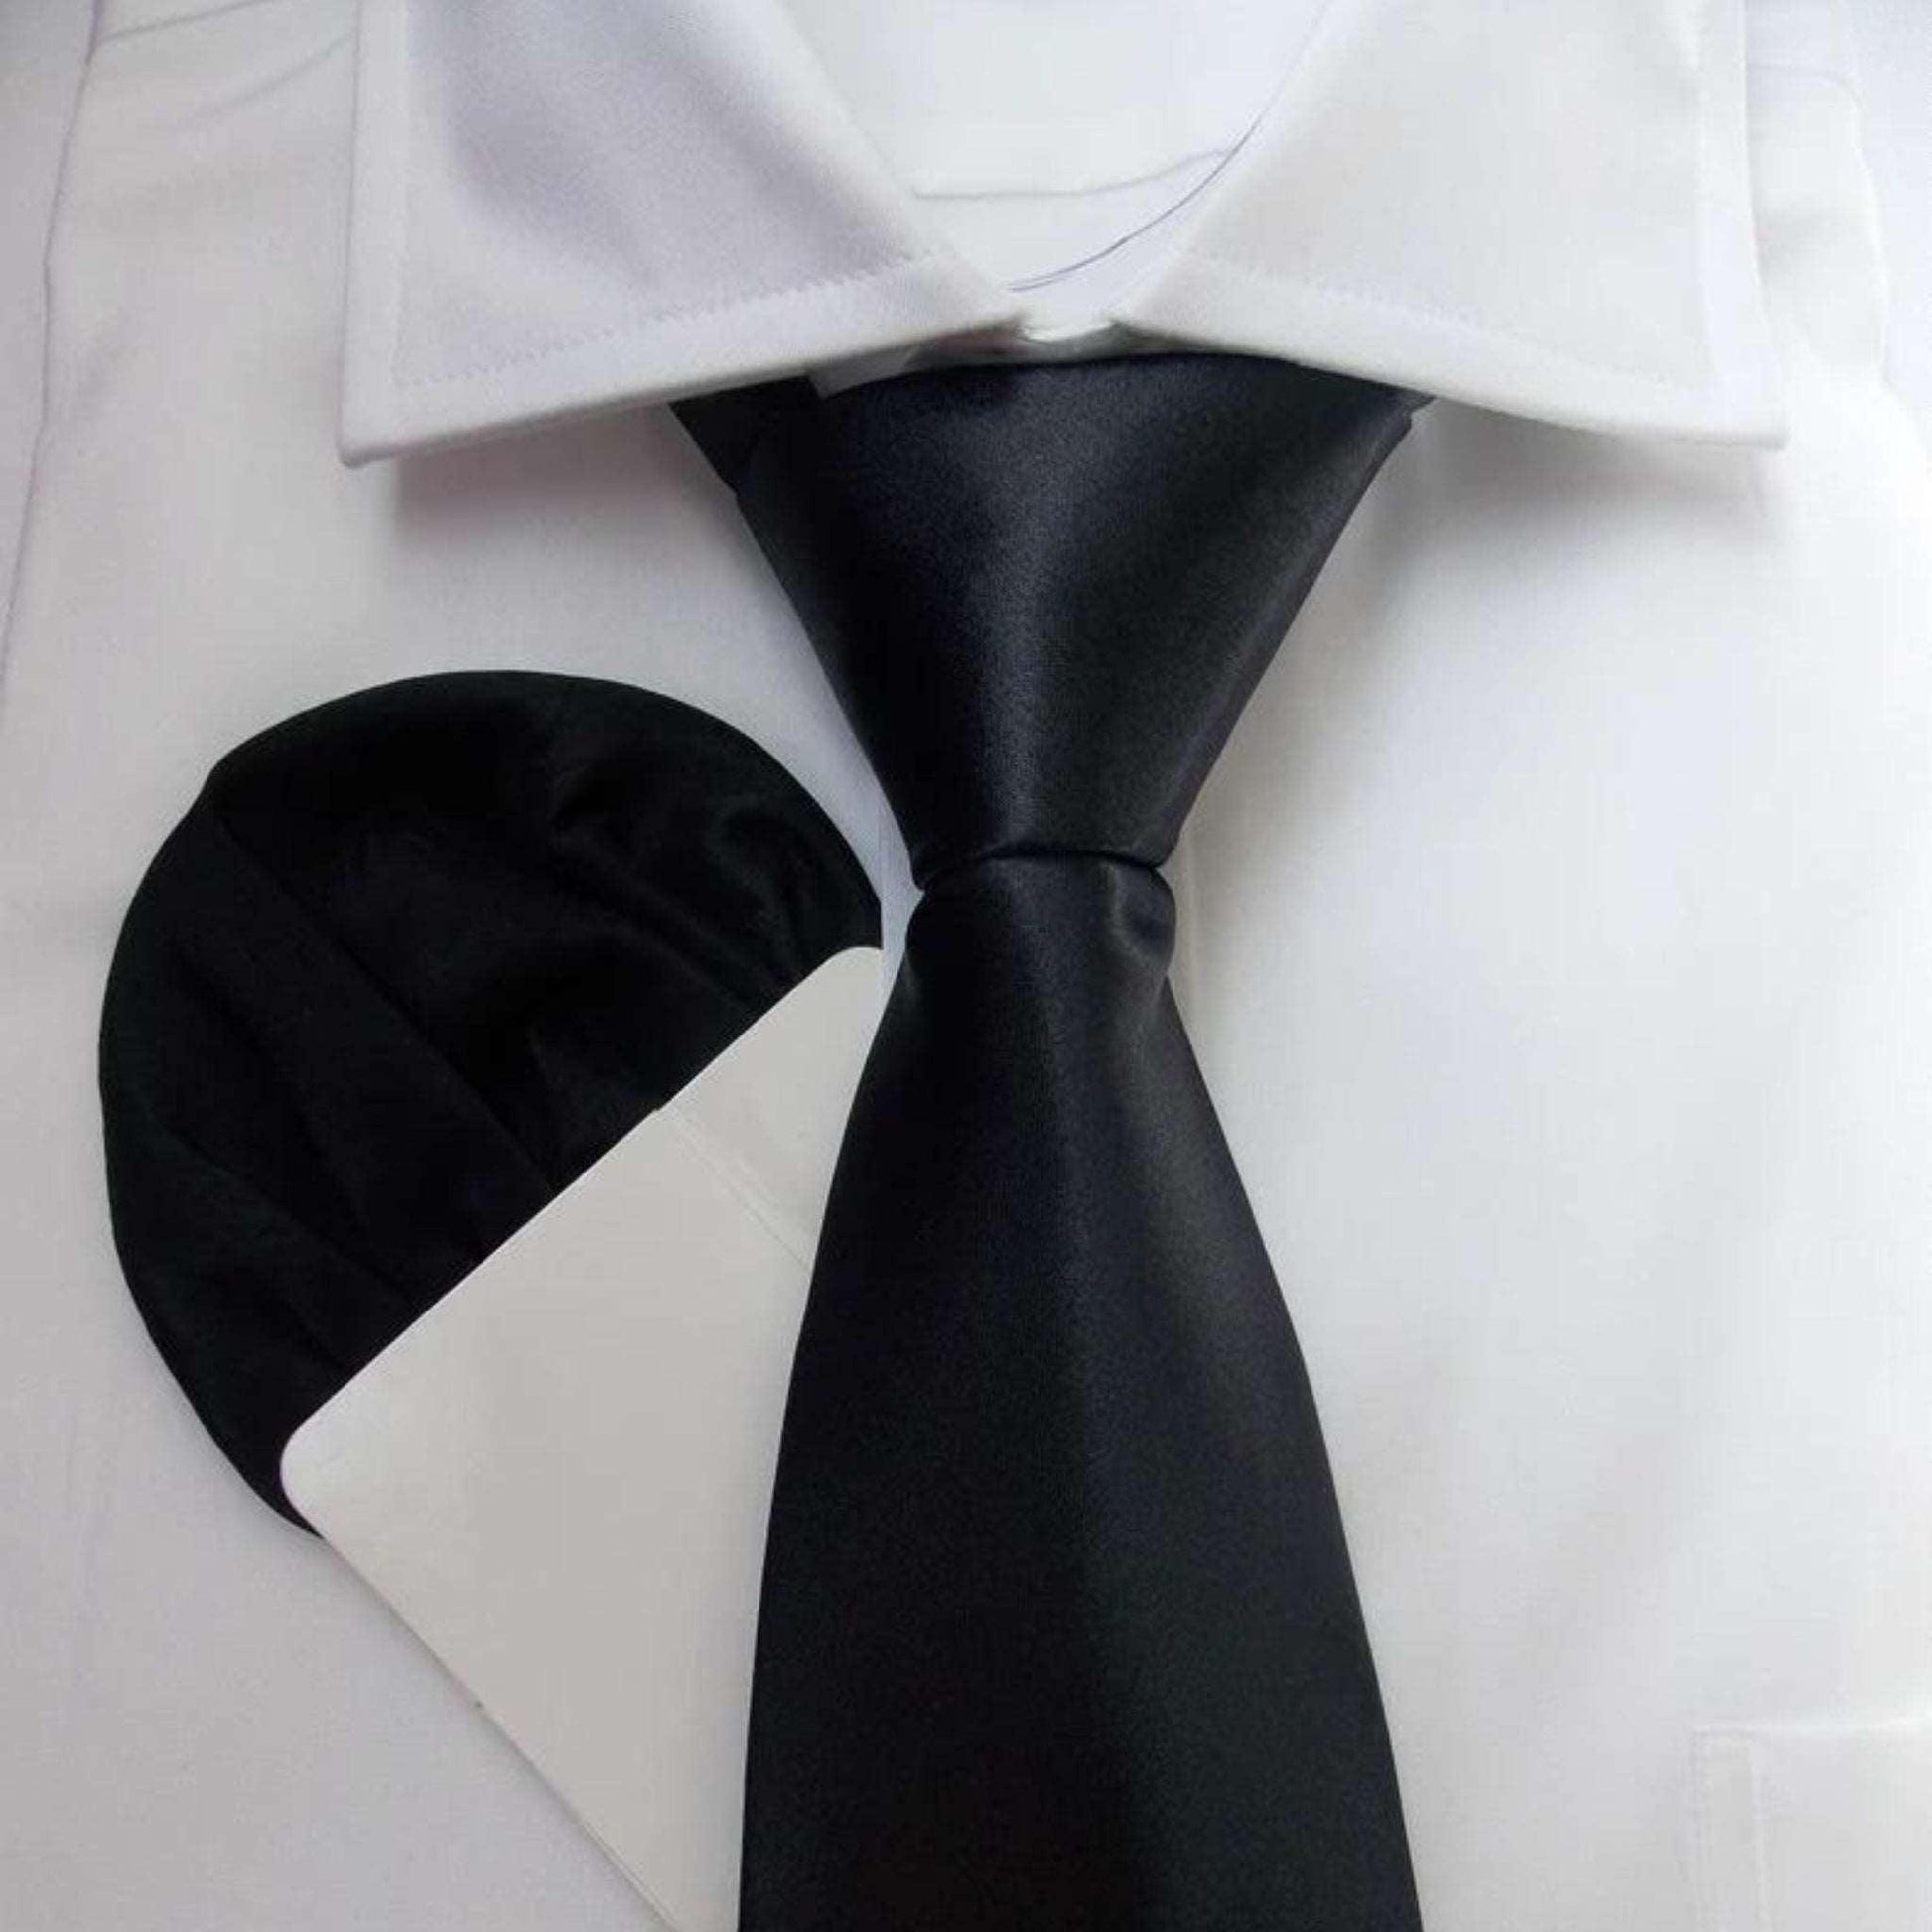 YOUTH ROBE Premium Tie (Black) - YOUTH ROBE